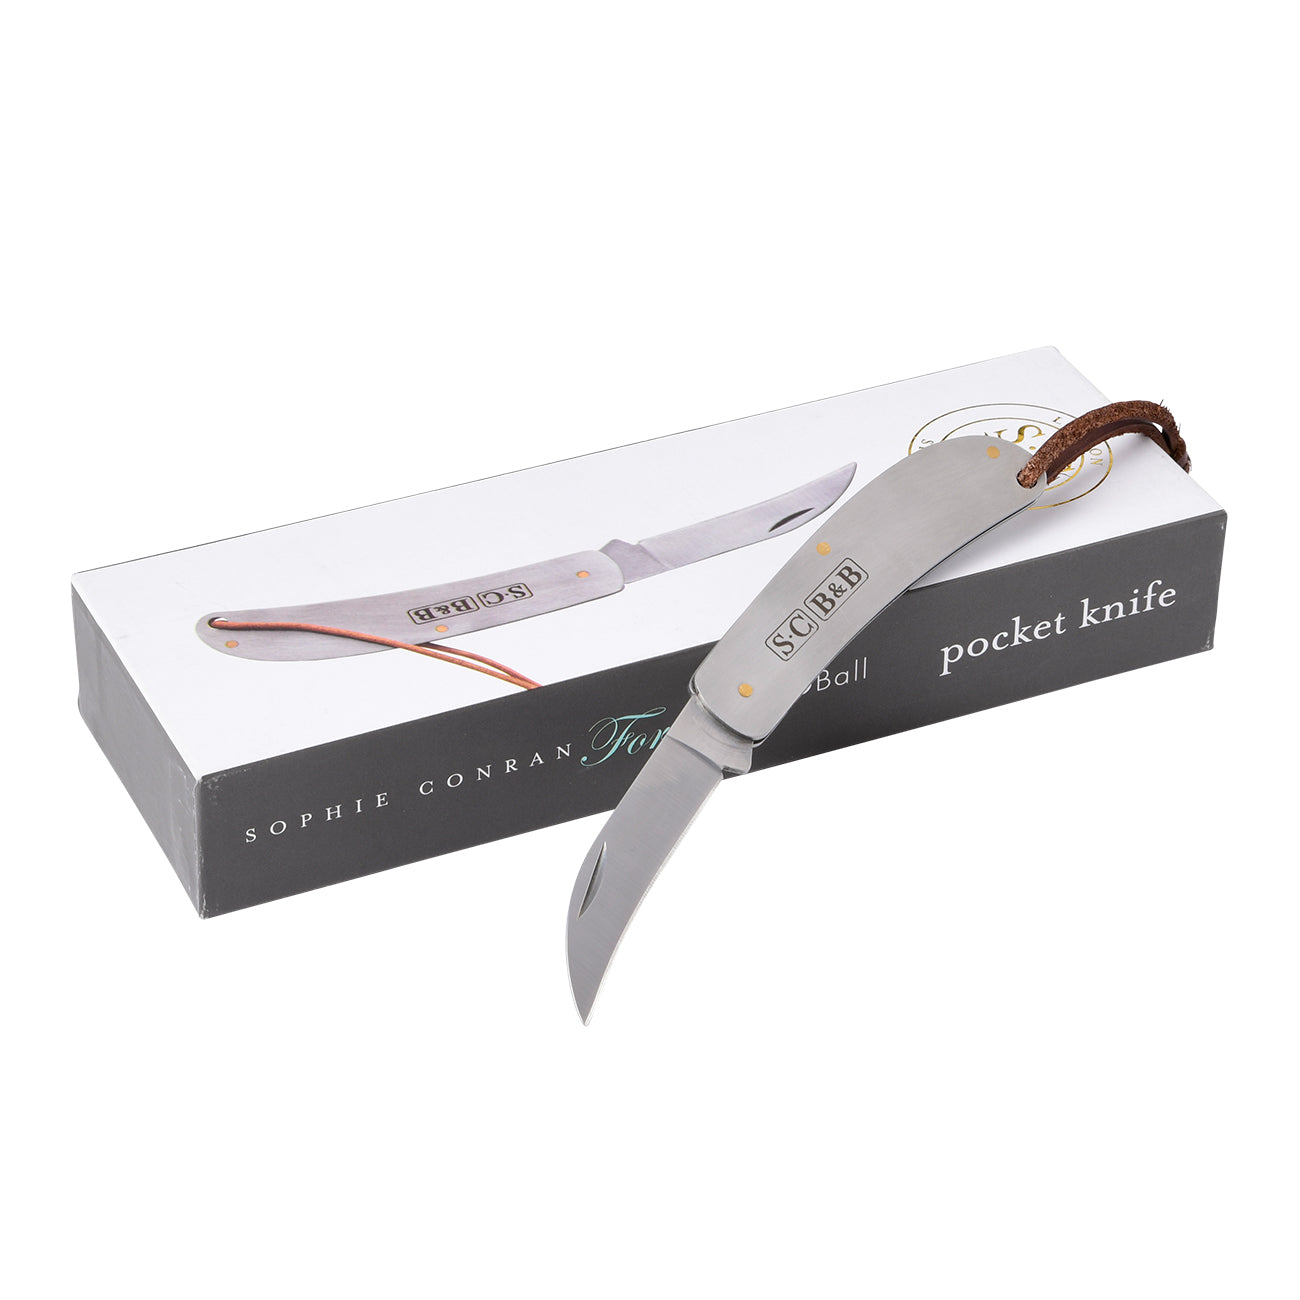 Sophie Conran Gift Boxed Pocket Knife